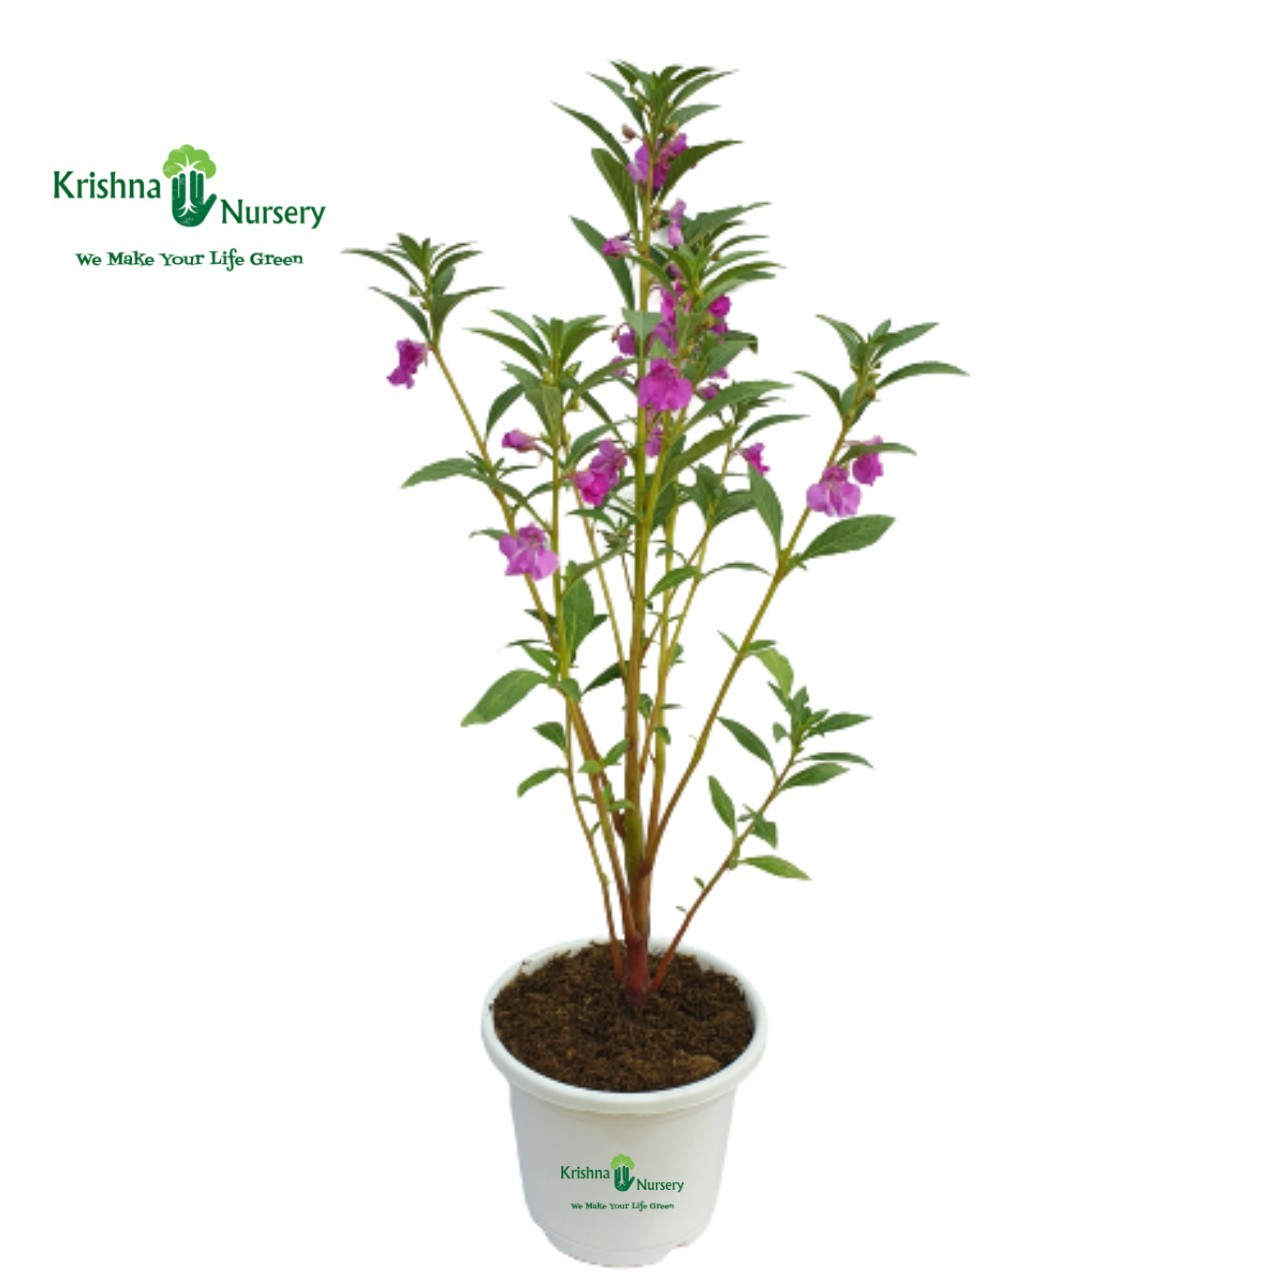 balsam-plant